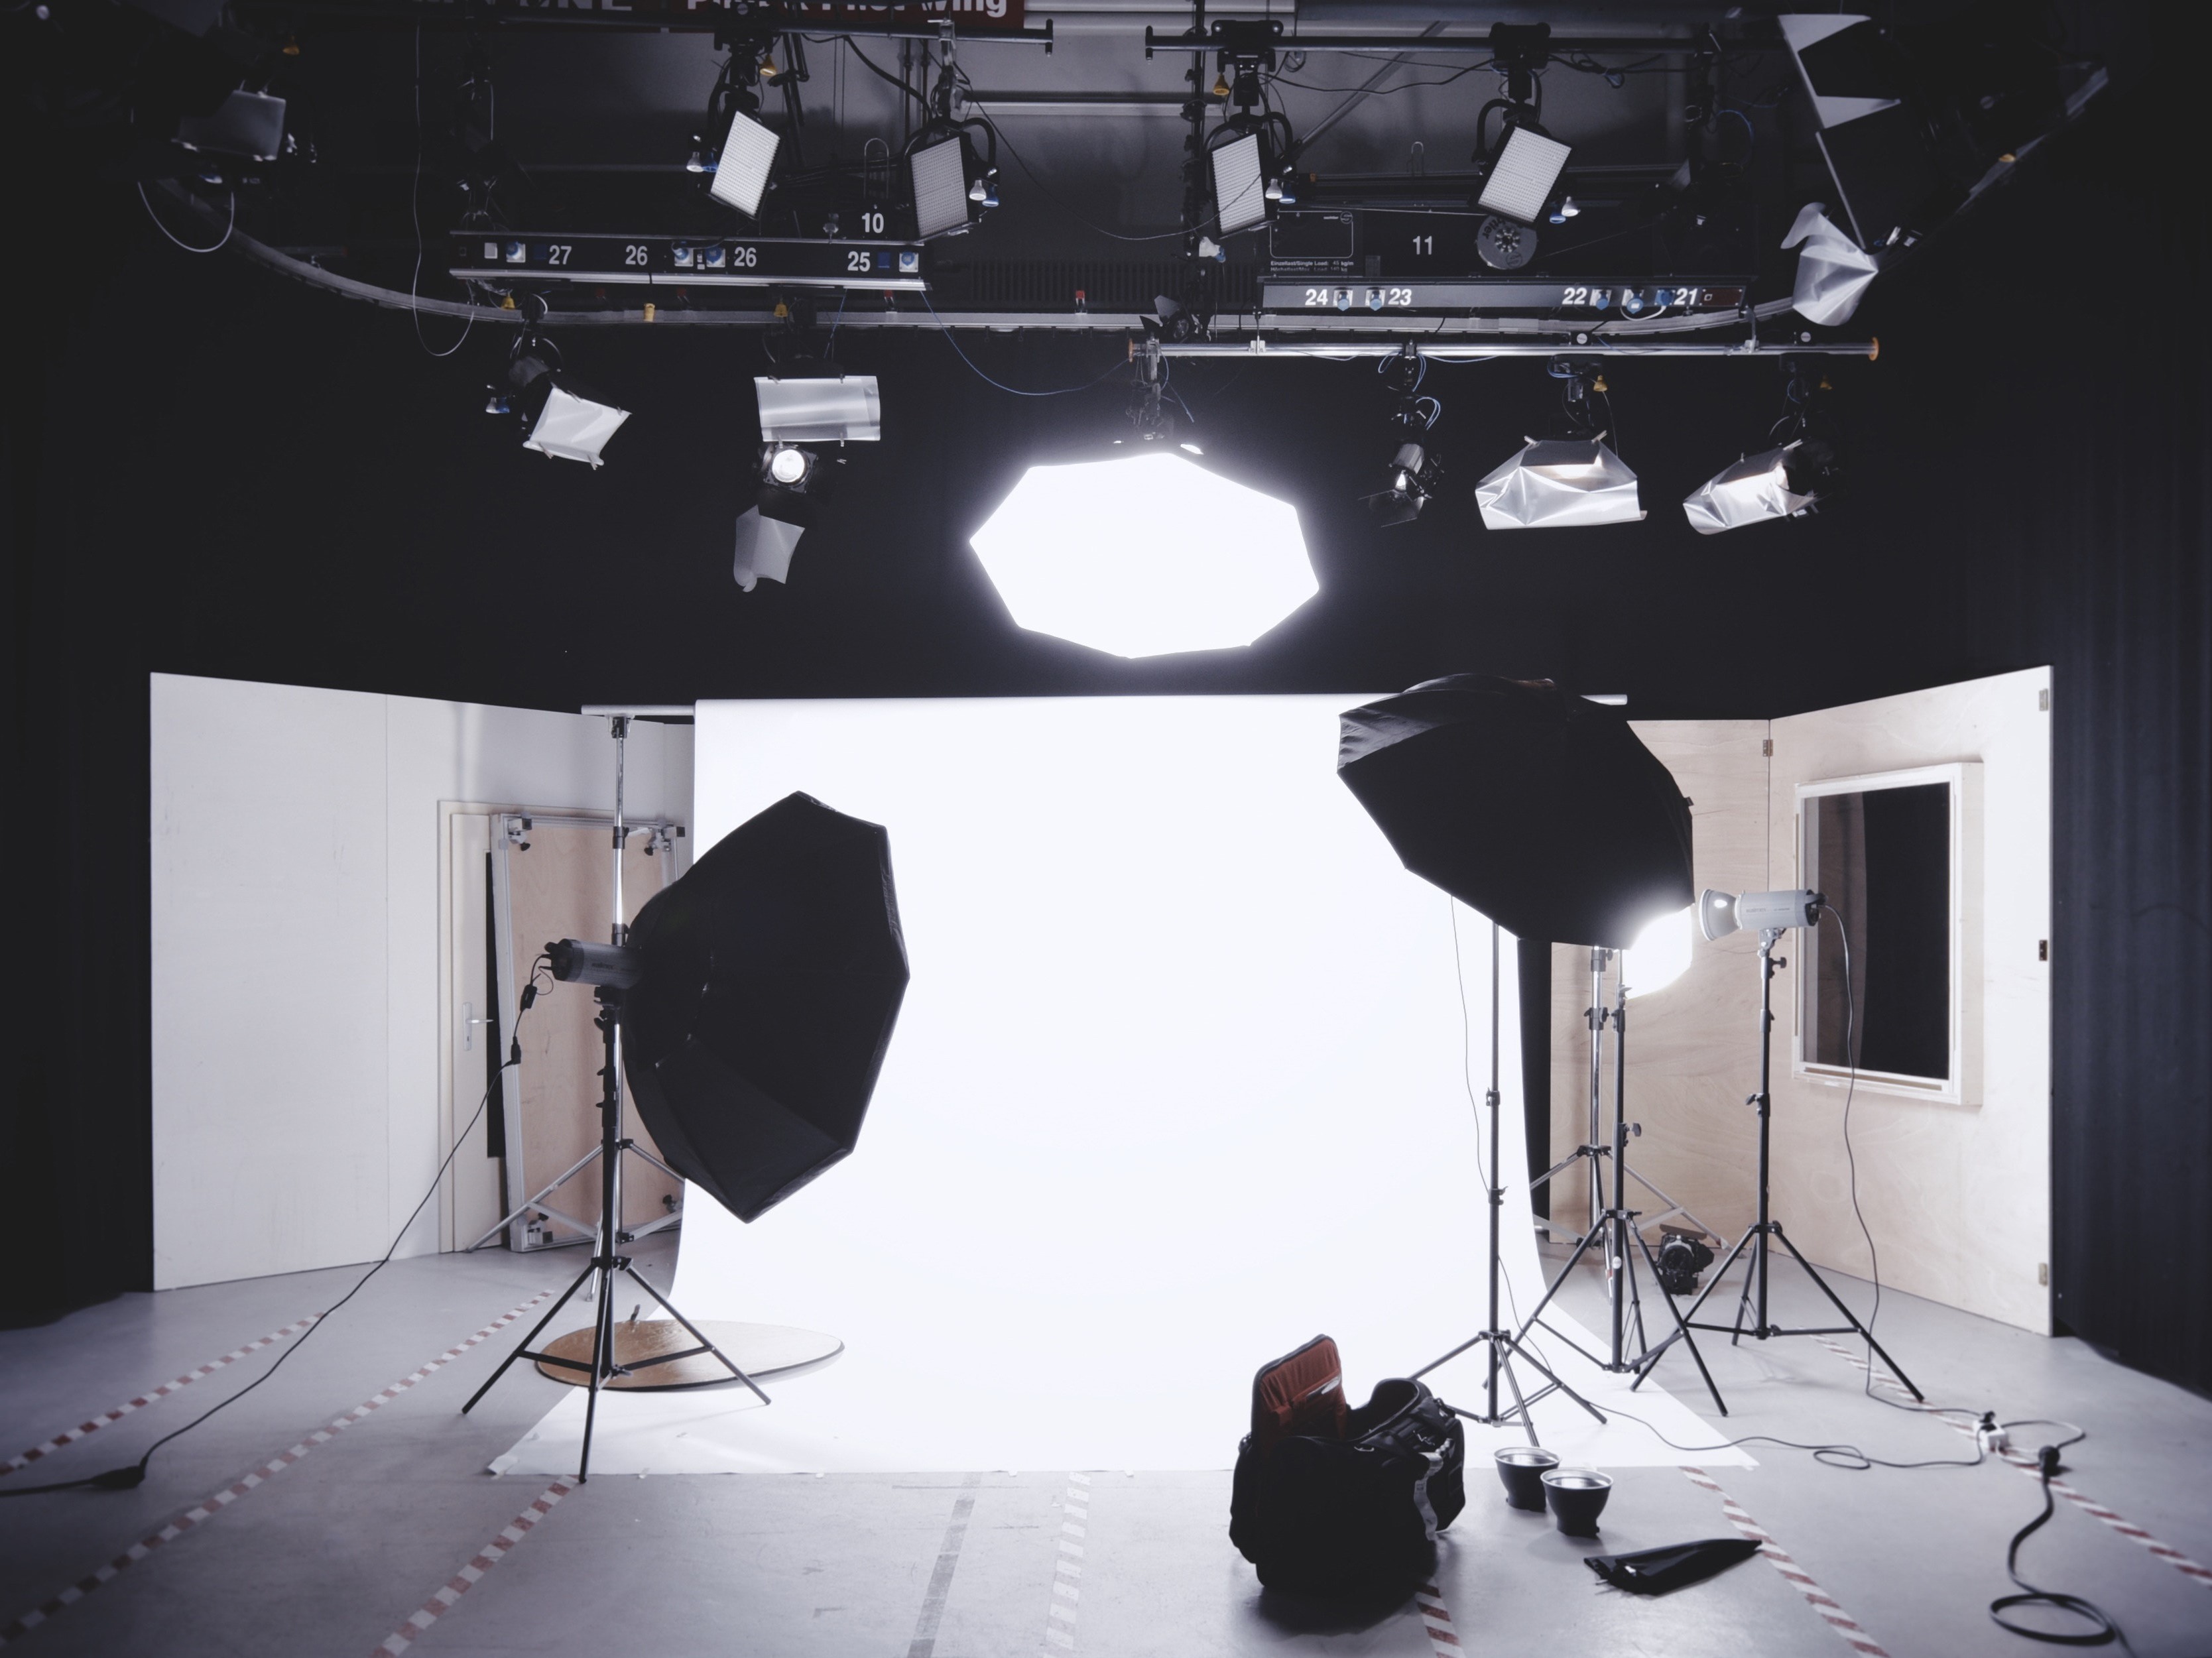 SAC-100: Intro to Studio Photography & Lighting